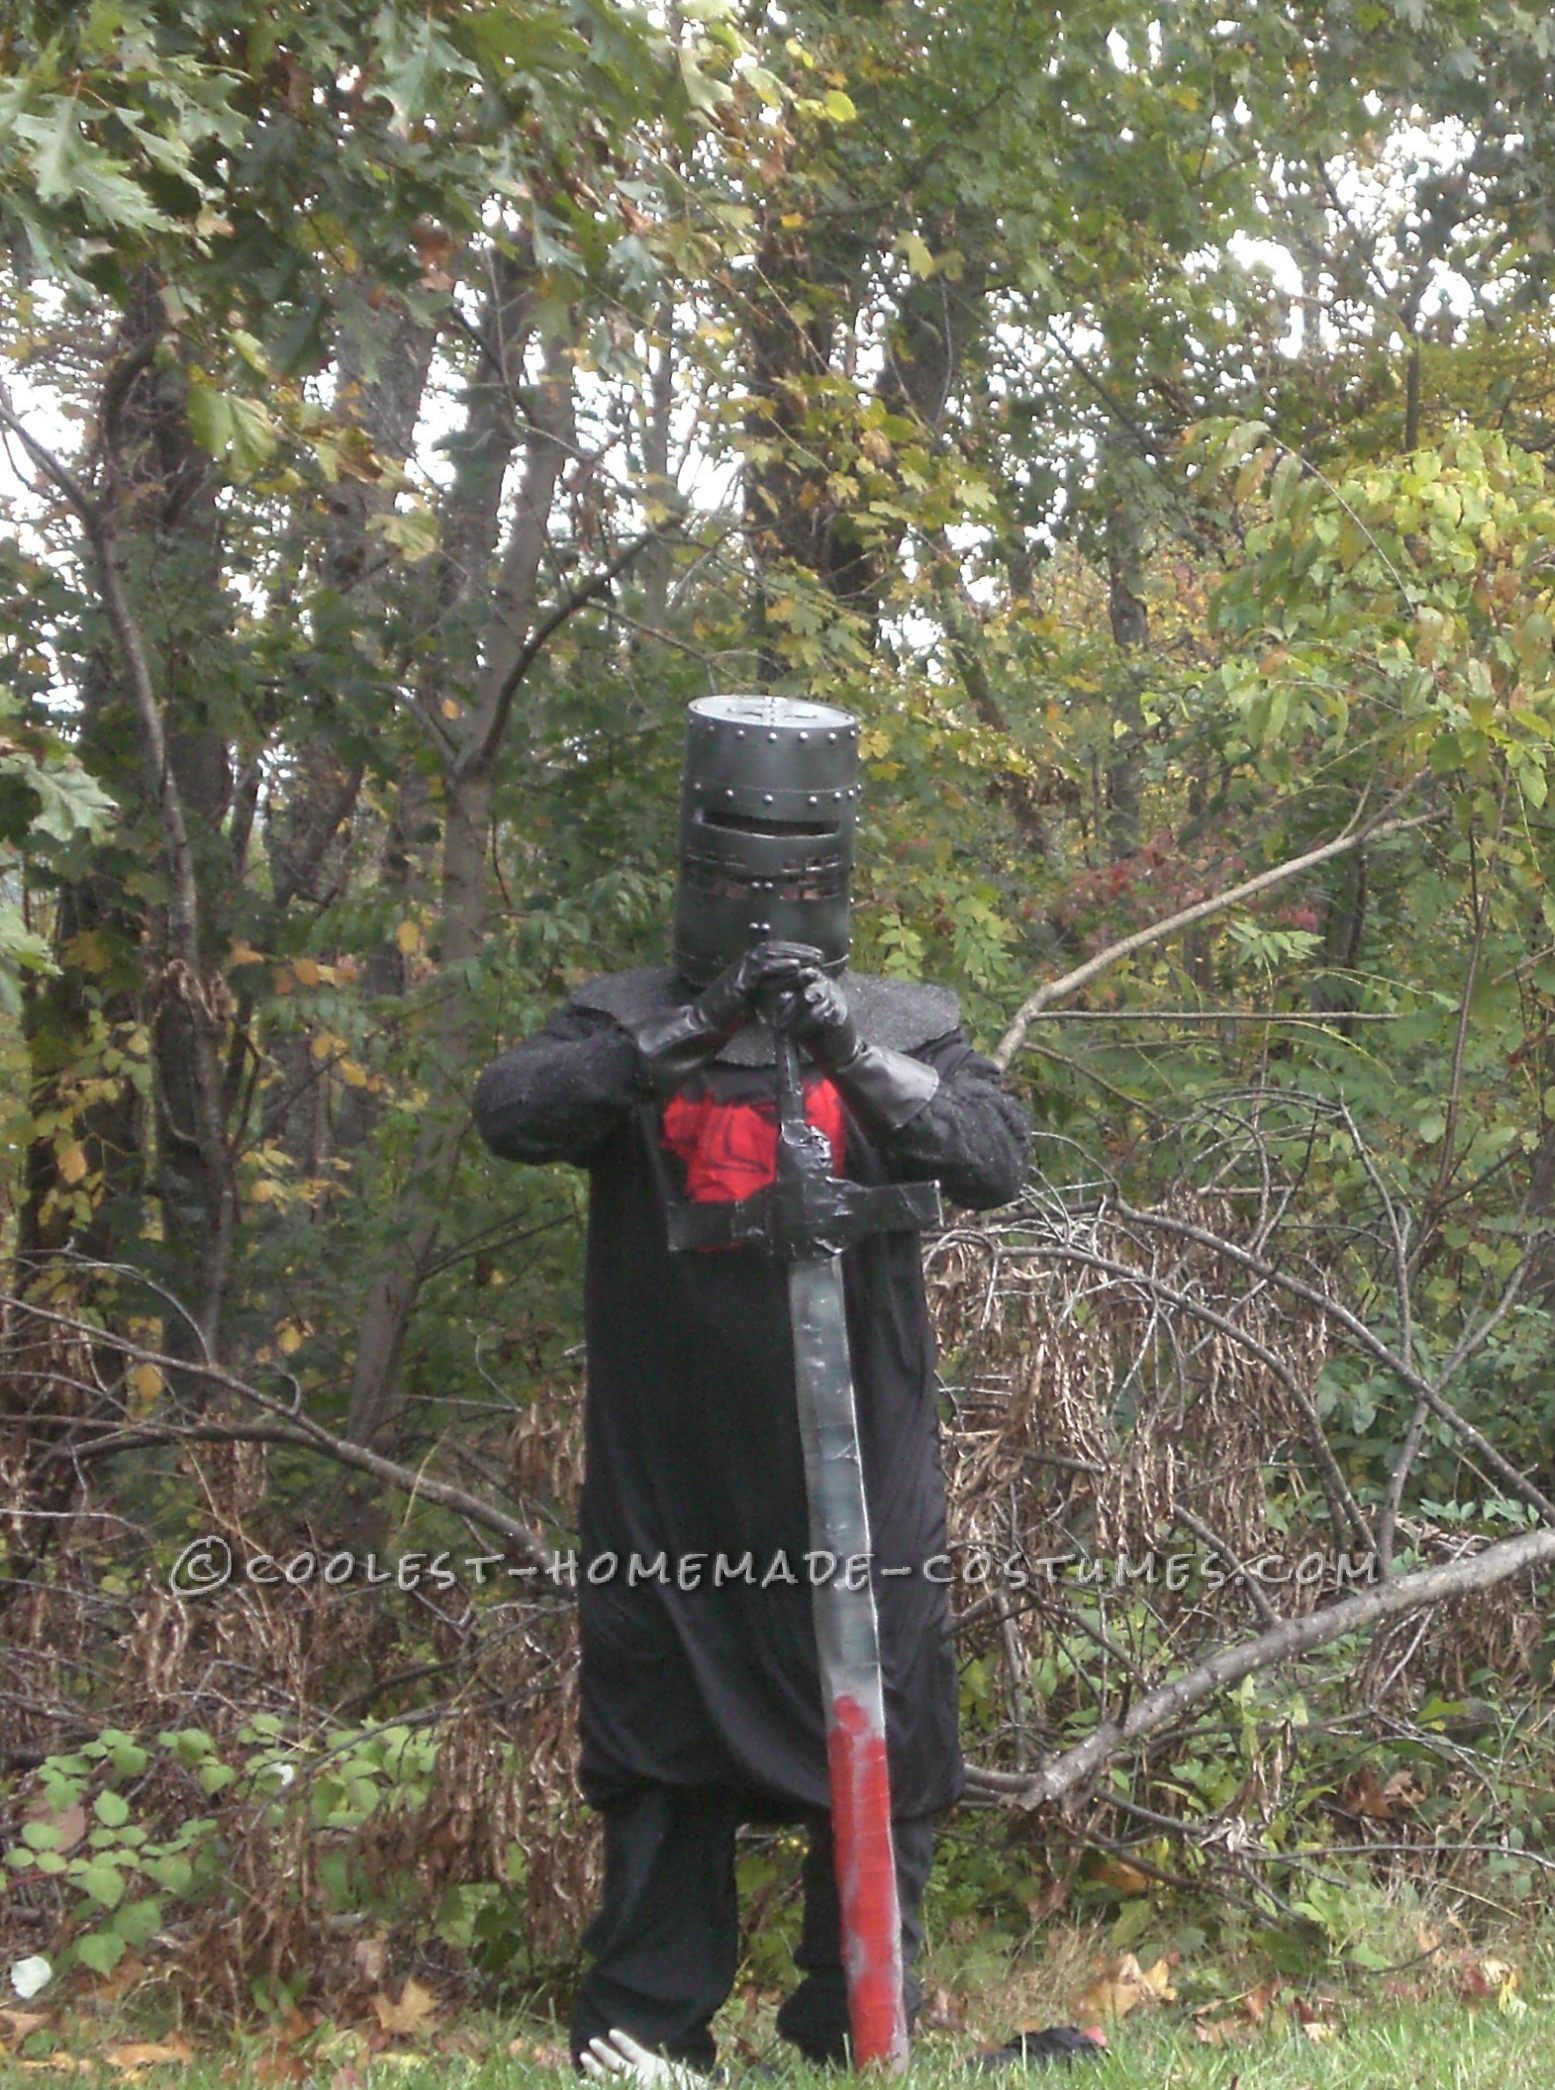 Black Knight Costume from Monty Python